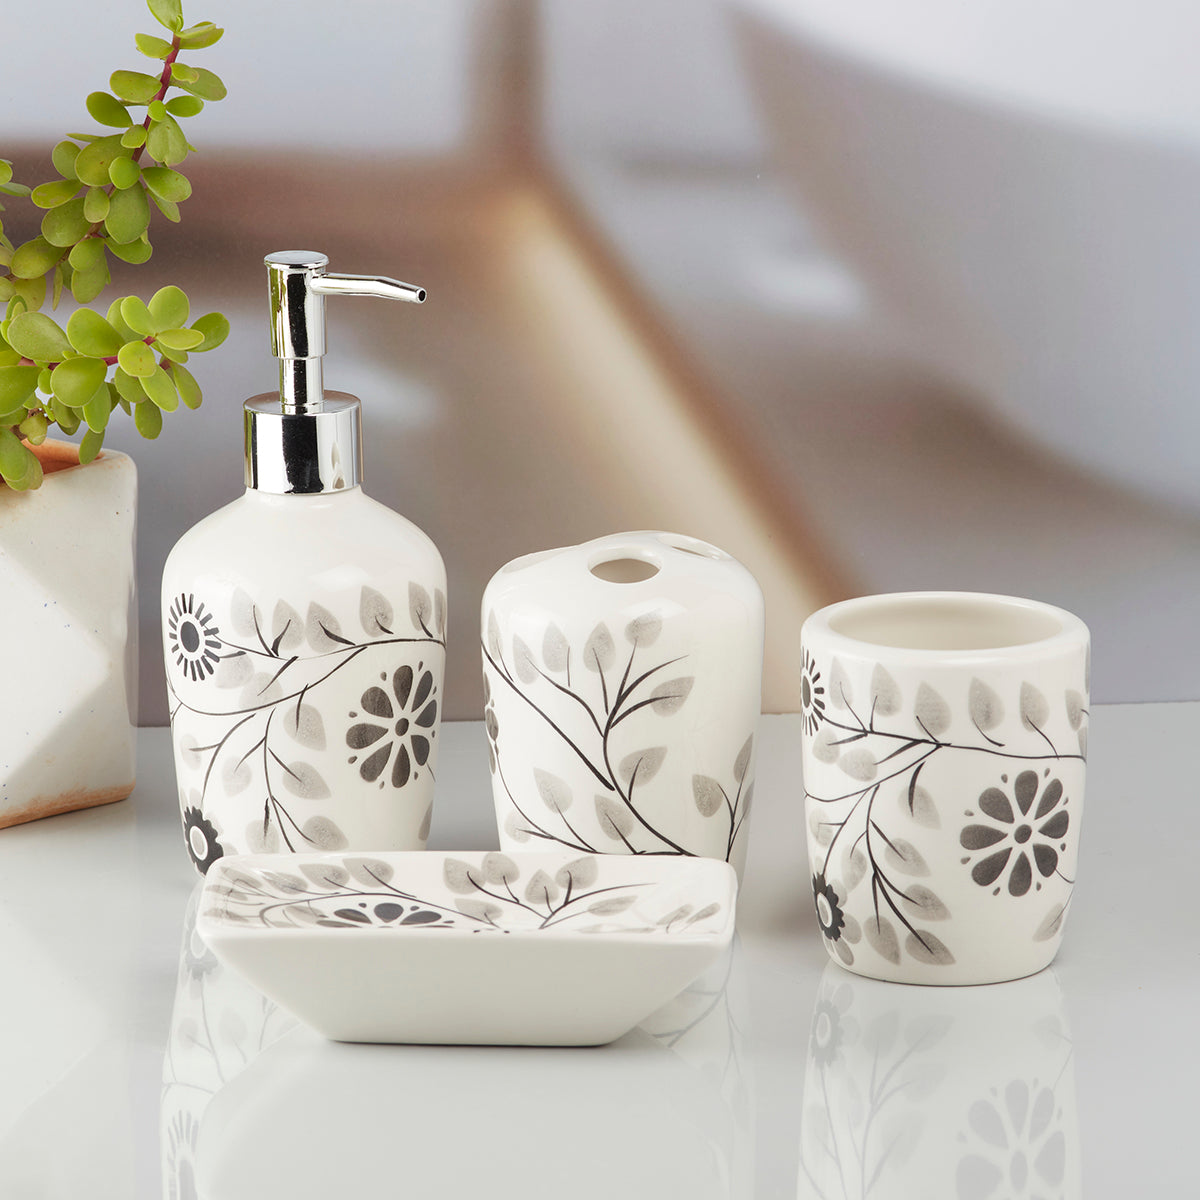 Ceramic Bathroom Accessories Set of 4 Bath Set with Soap Dispenser (10212)